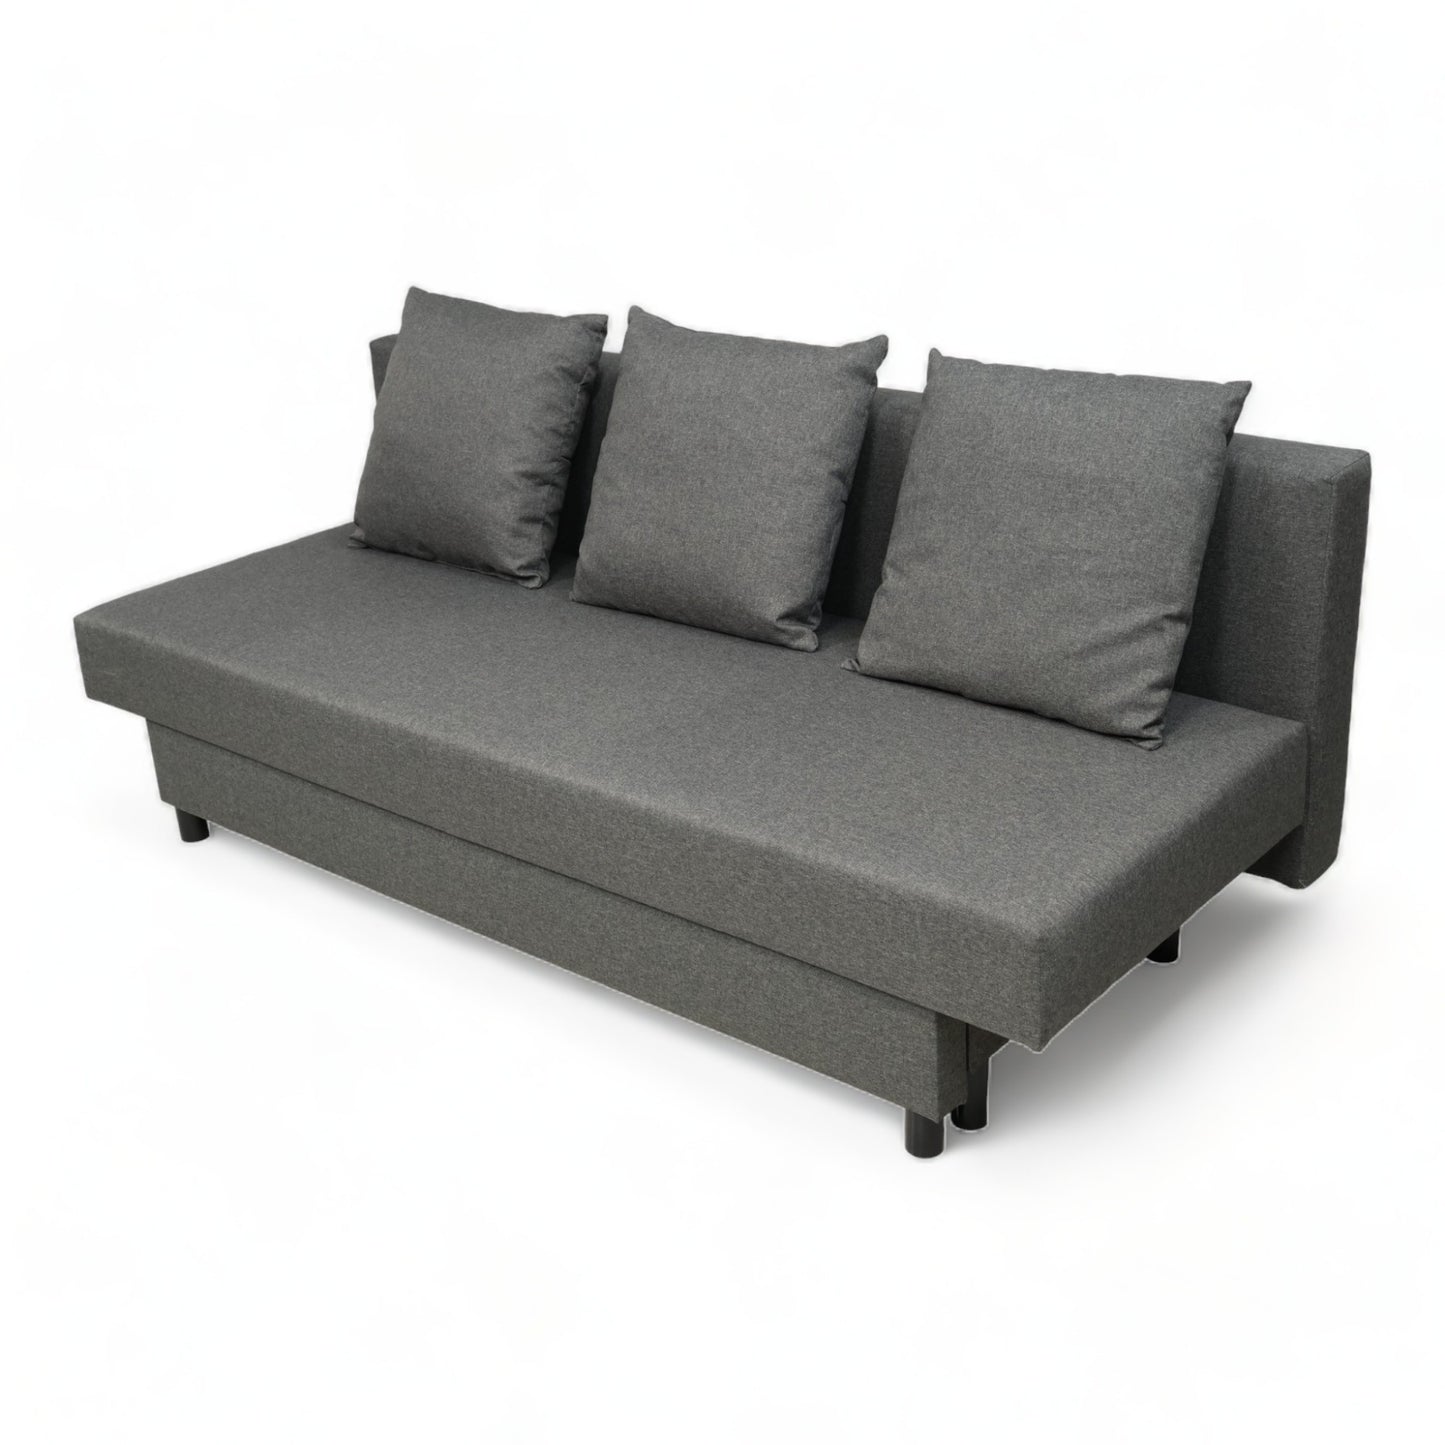 Utmerket tilstand | Mørk grå IKEA Asarum sovesofa